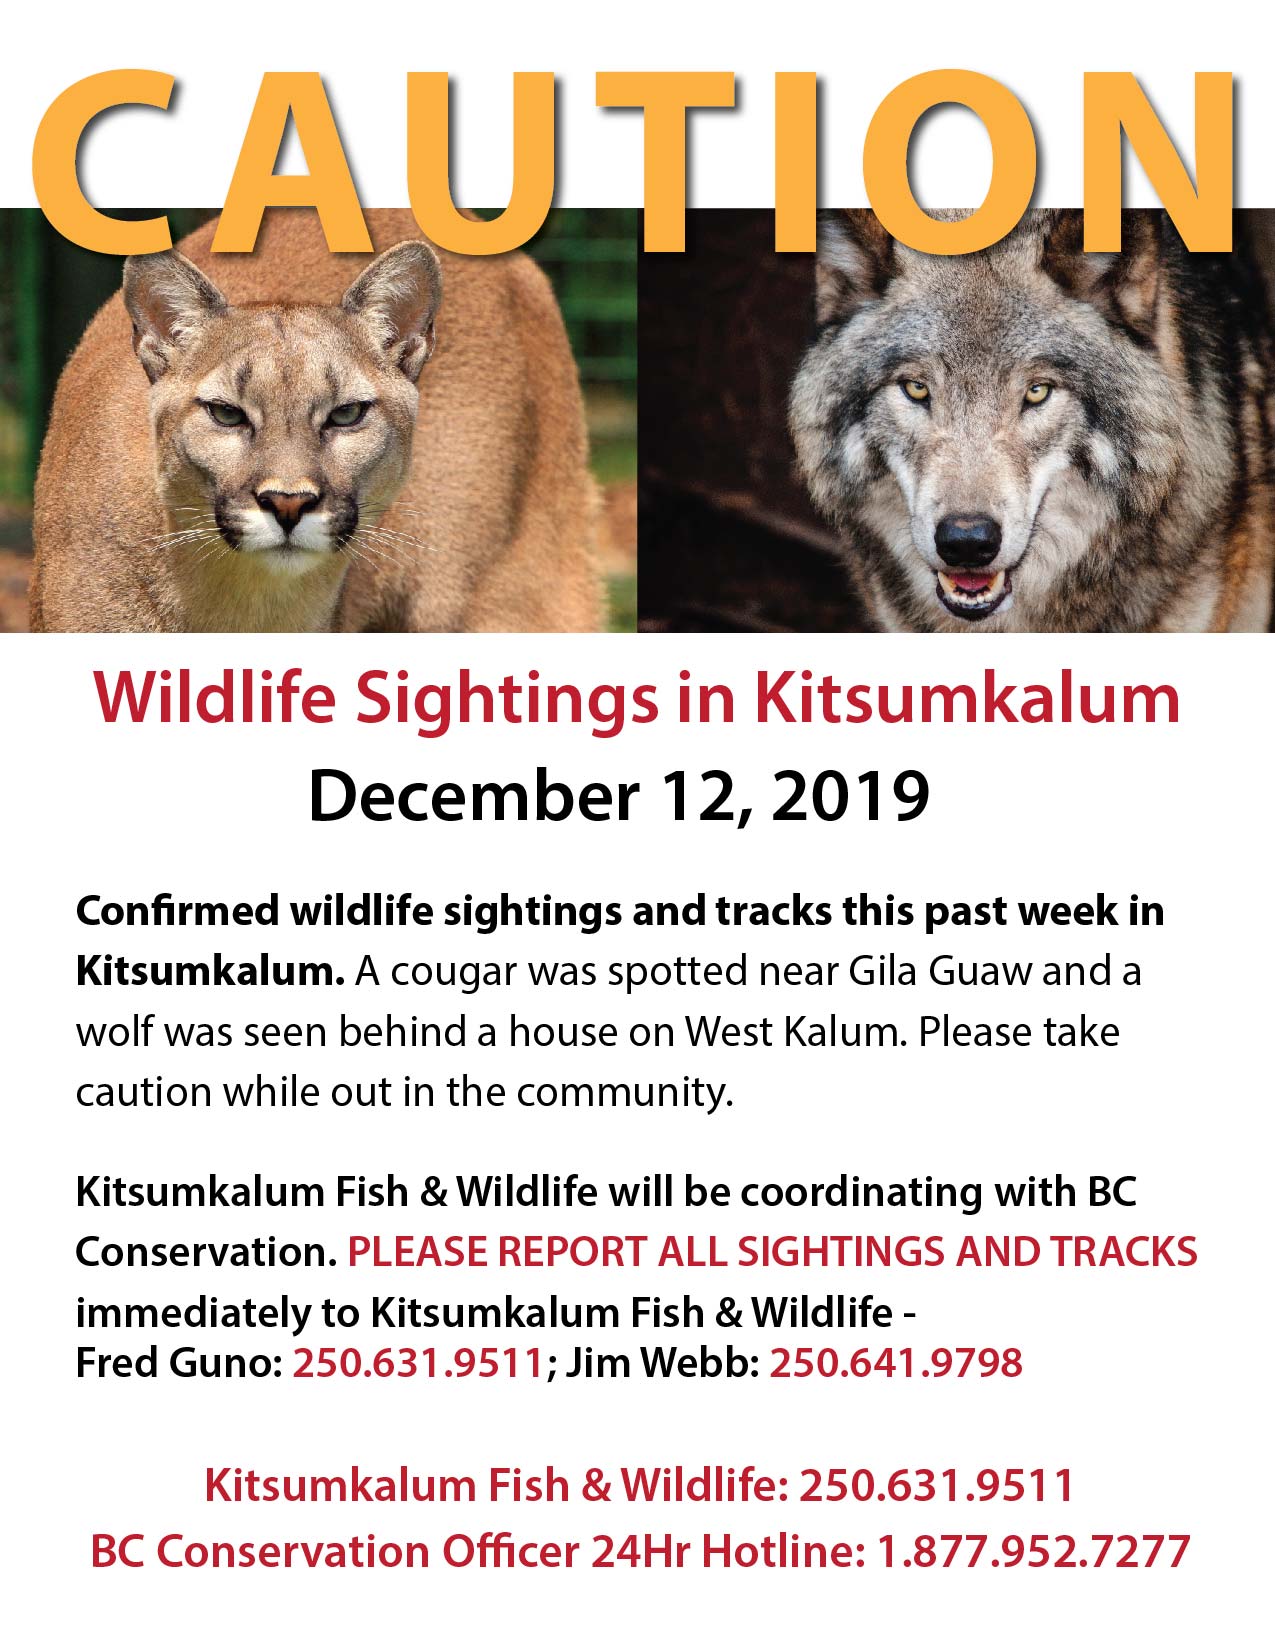 Report Wildlife Sightings Immediately to Kitsumkalum Fish & Wildlife